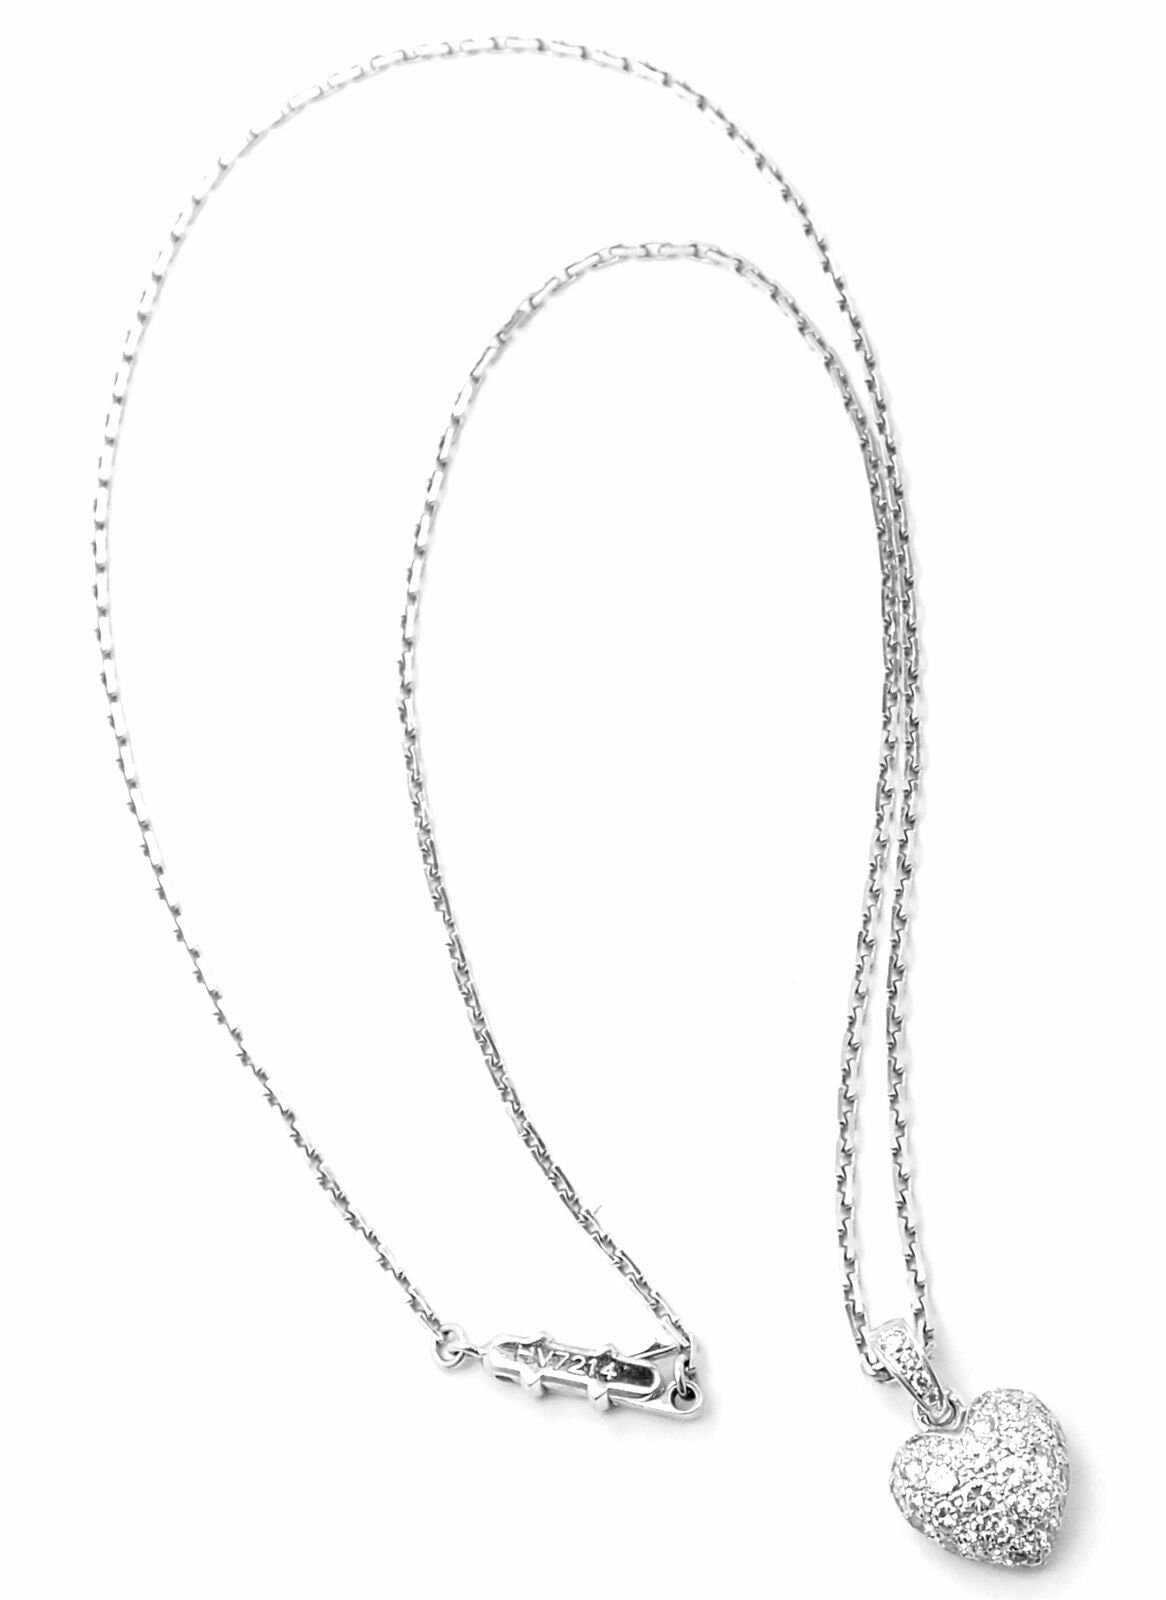 Louis Vuitton, Jewelry, Louis Vuitton Authentic Gold Heart Choker Necklace